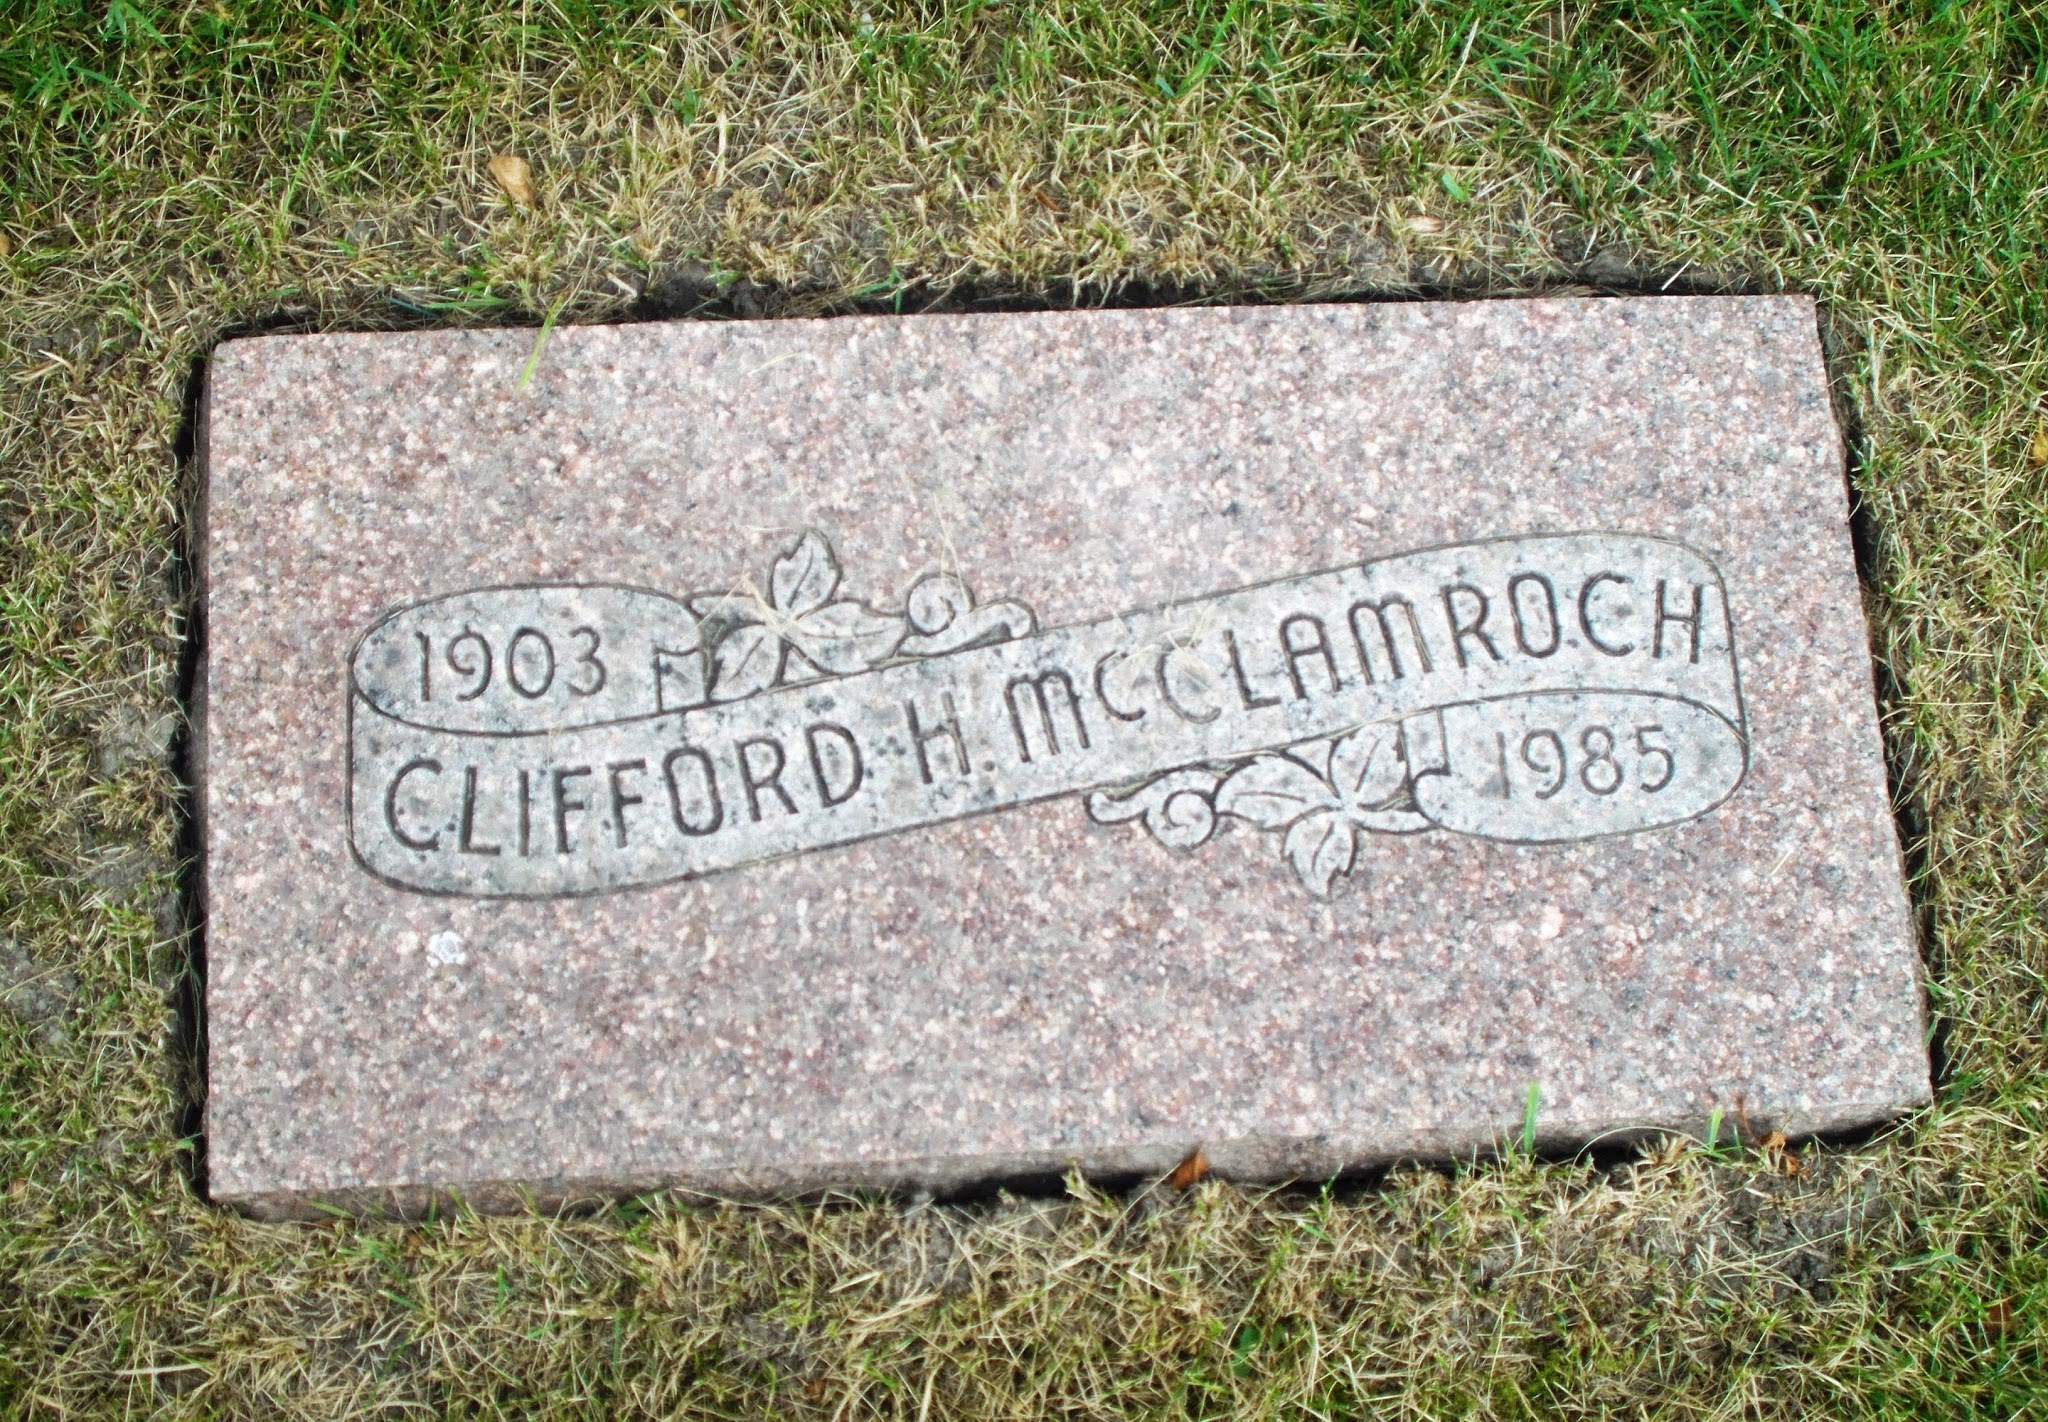 Clifford H McClamroch